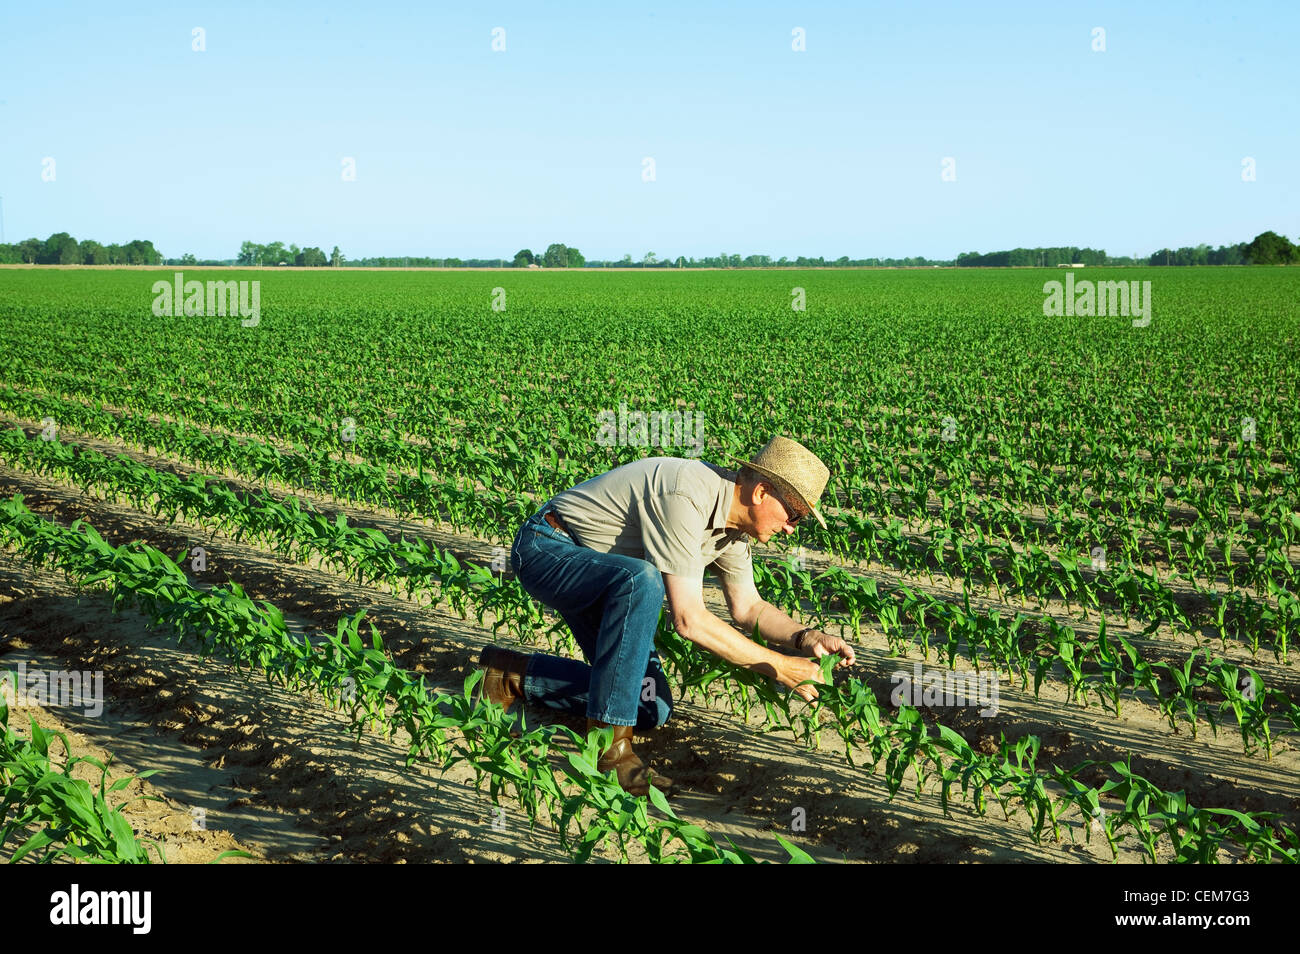 Agriculture - A farmer (grower) examines early growth grain corn plants at the 6 leaf stage / near England, Arkansas, USA. Stock Photo